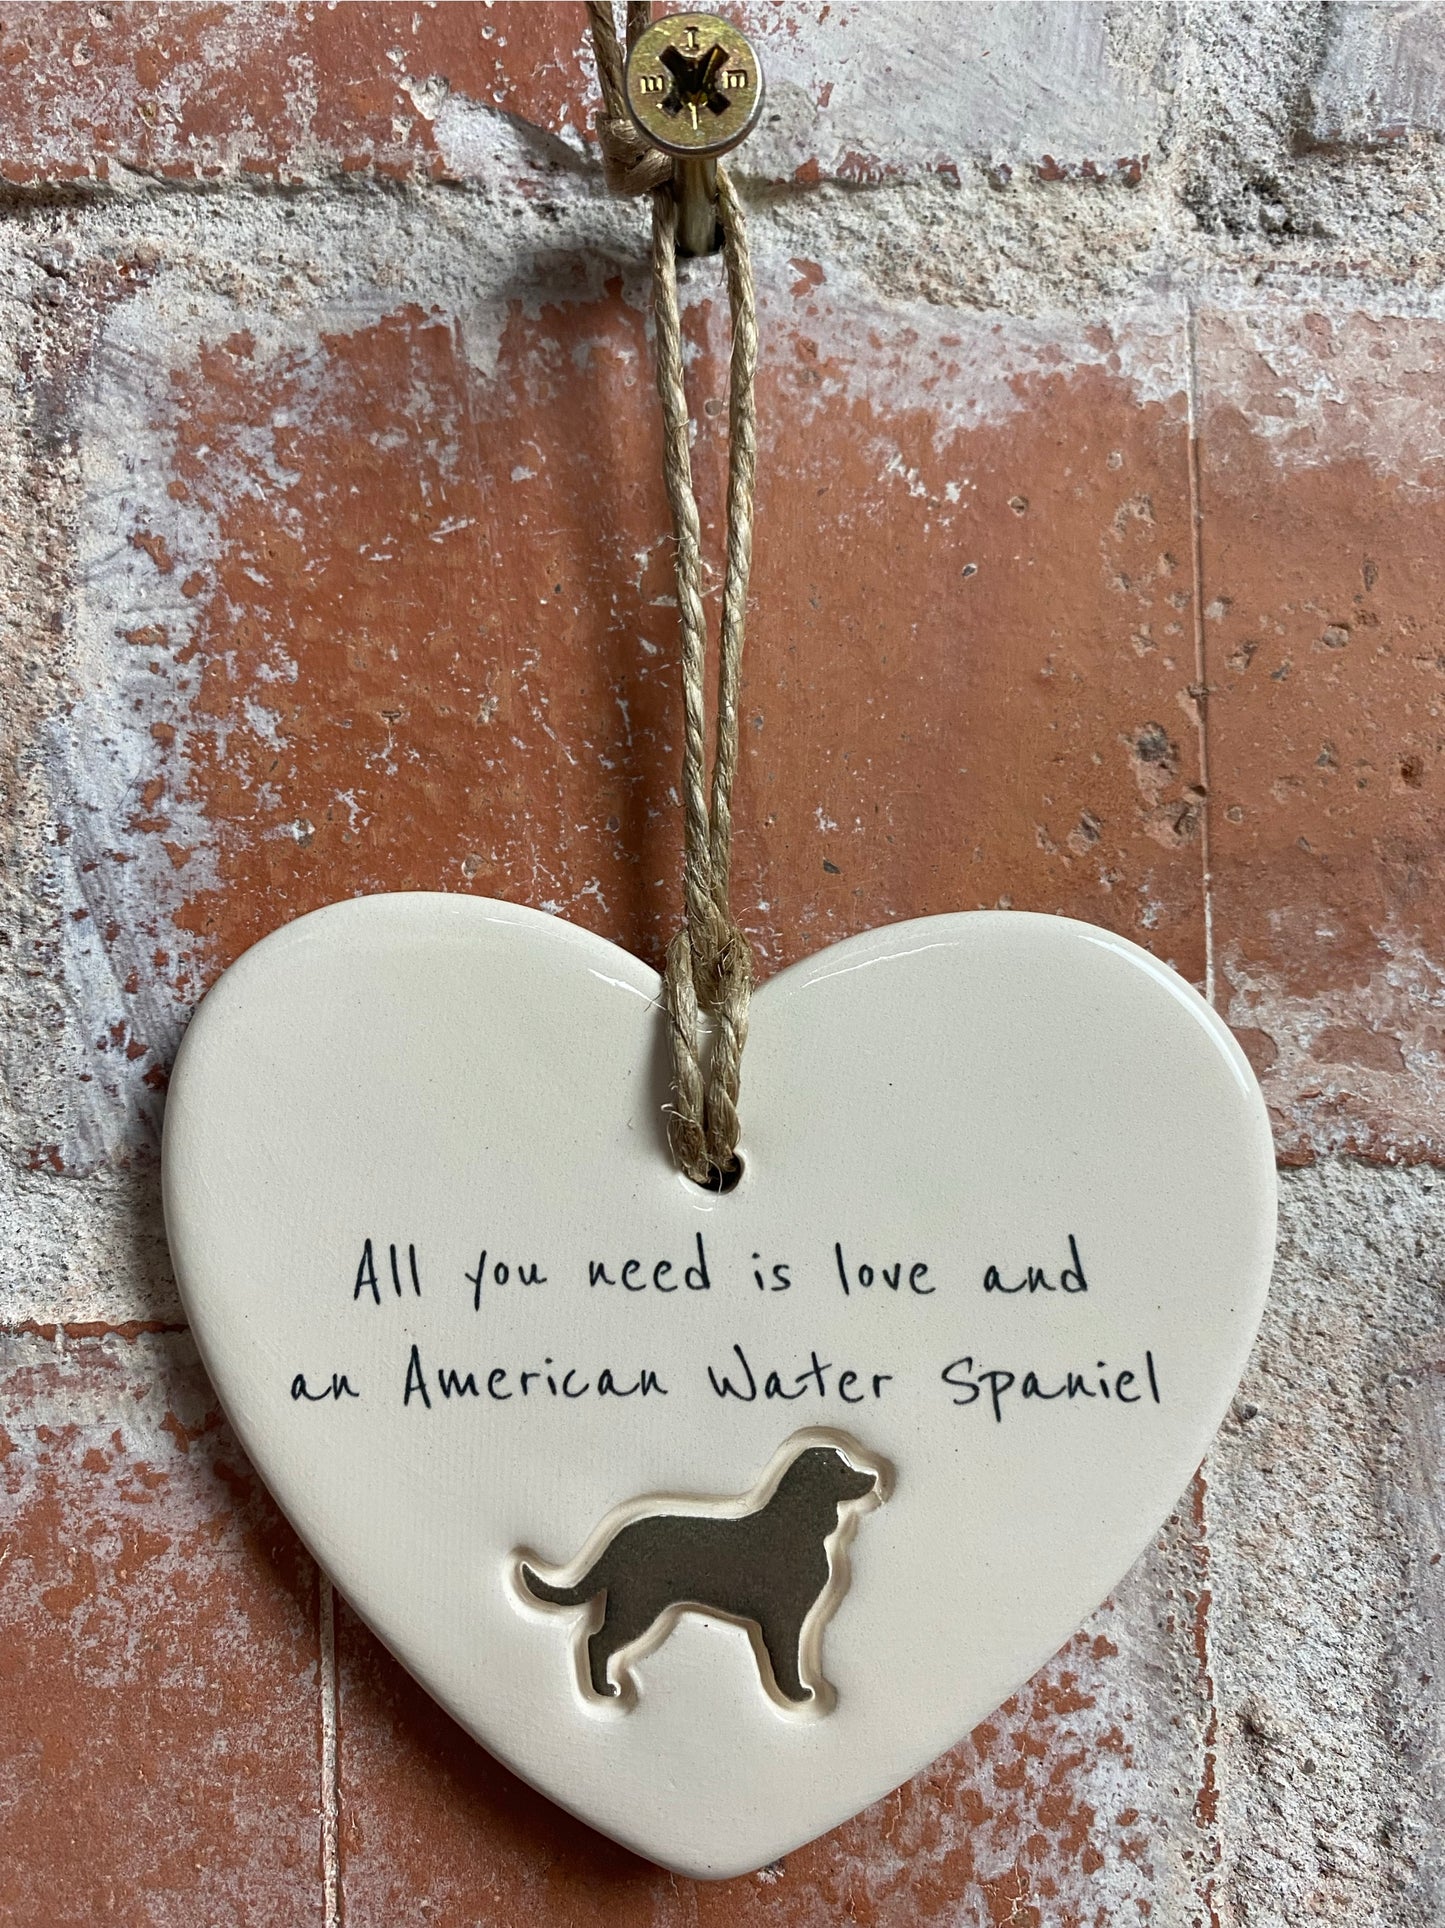 American Water Spaniel ceramic heart